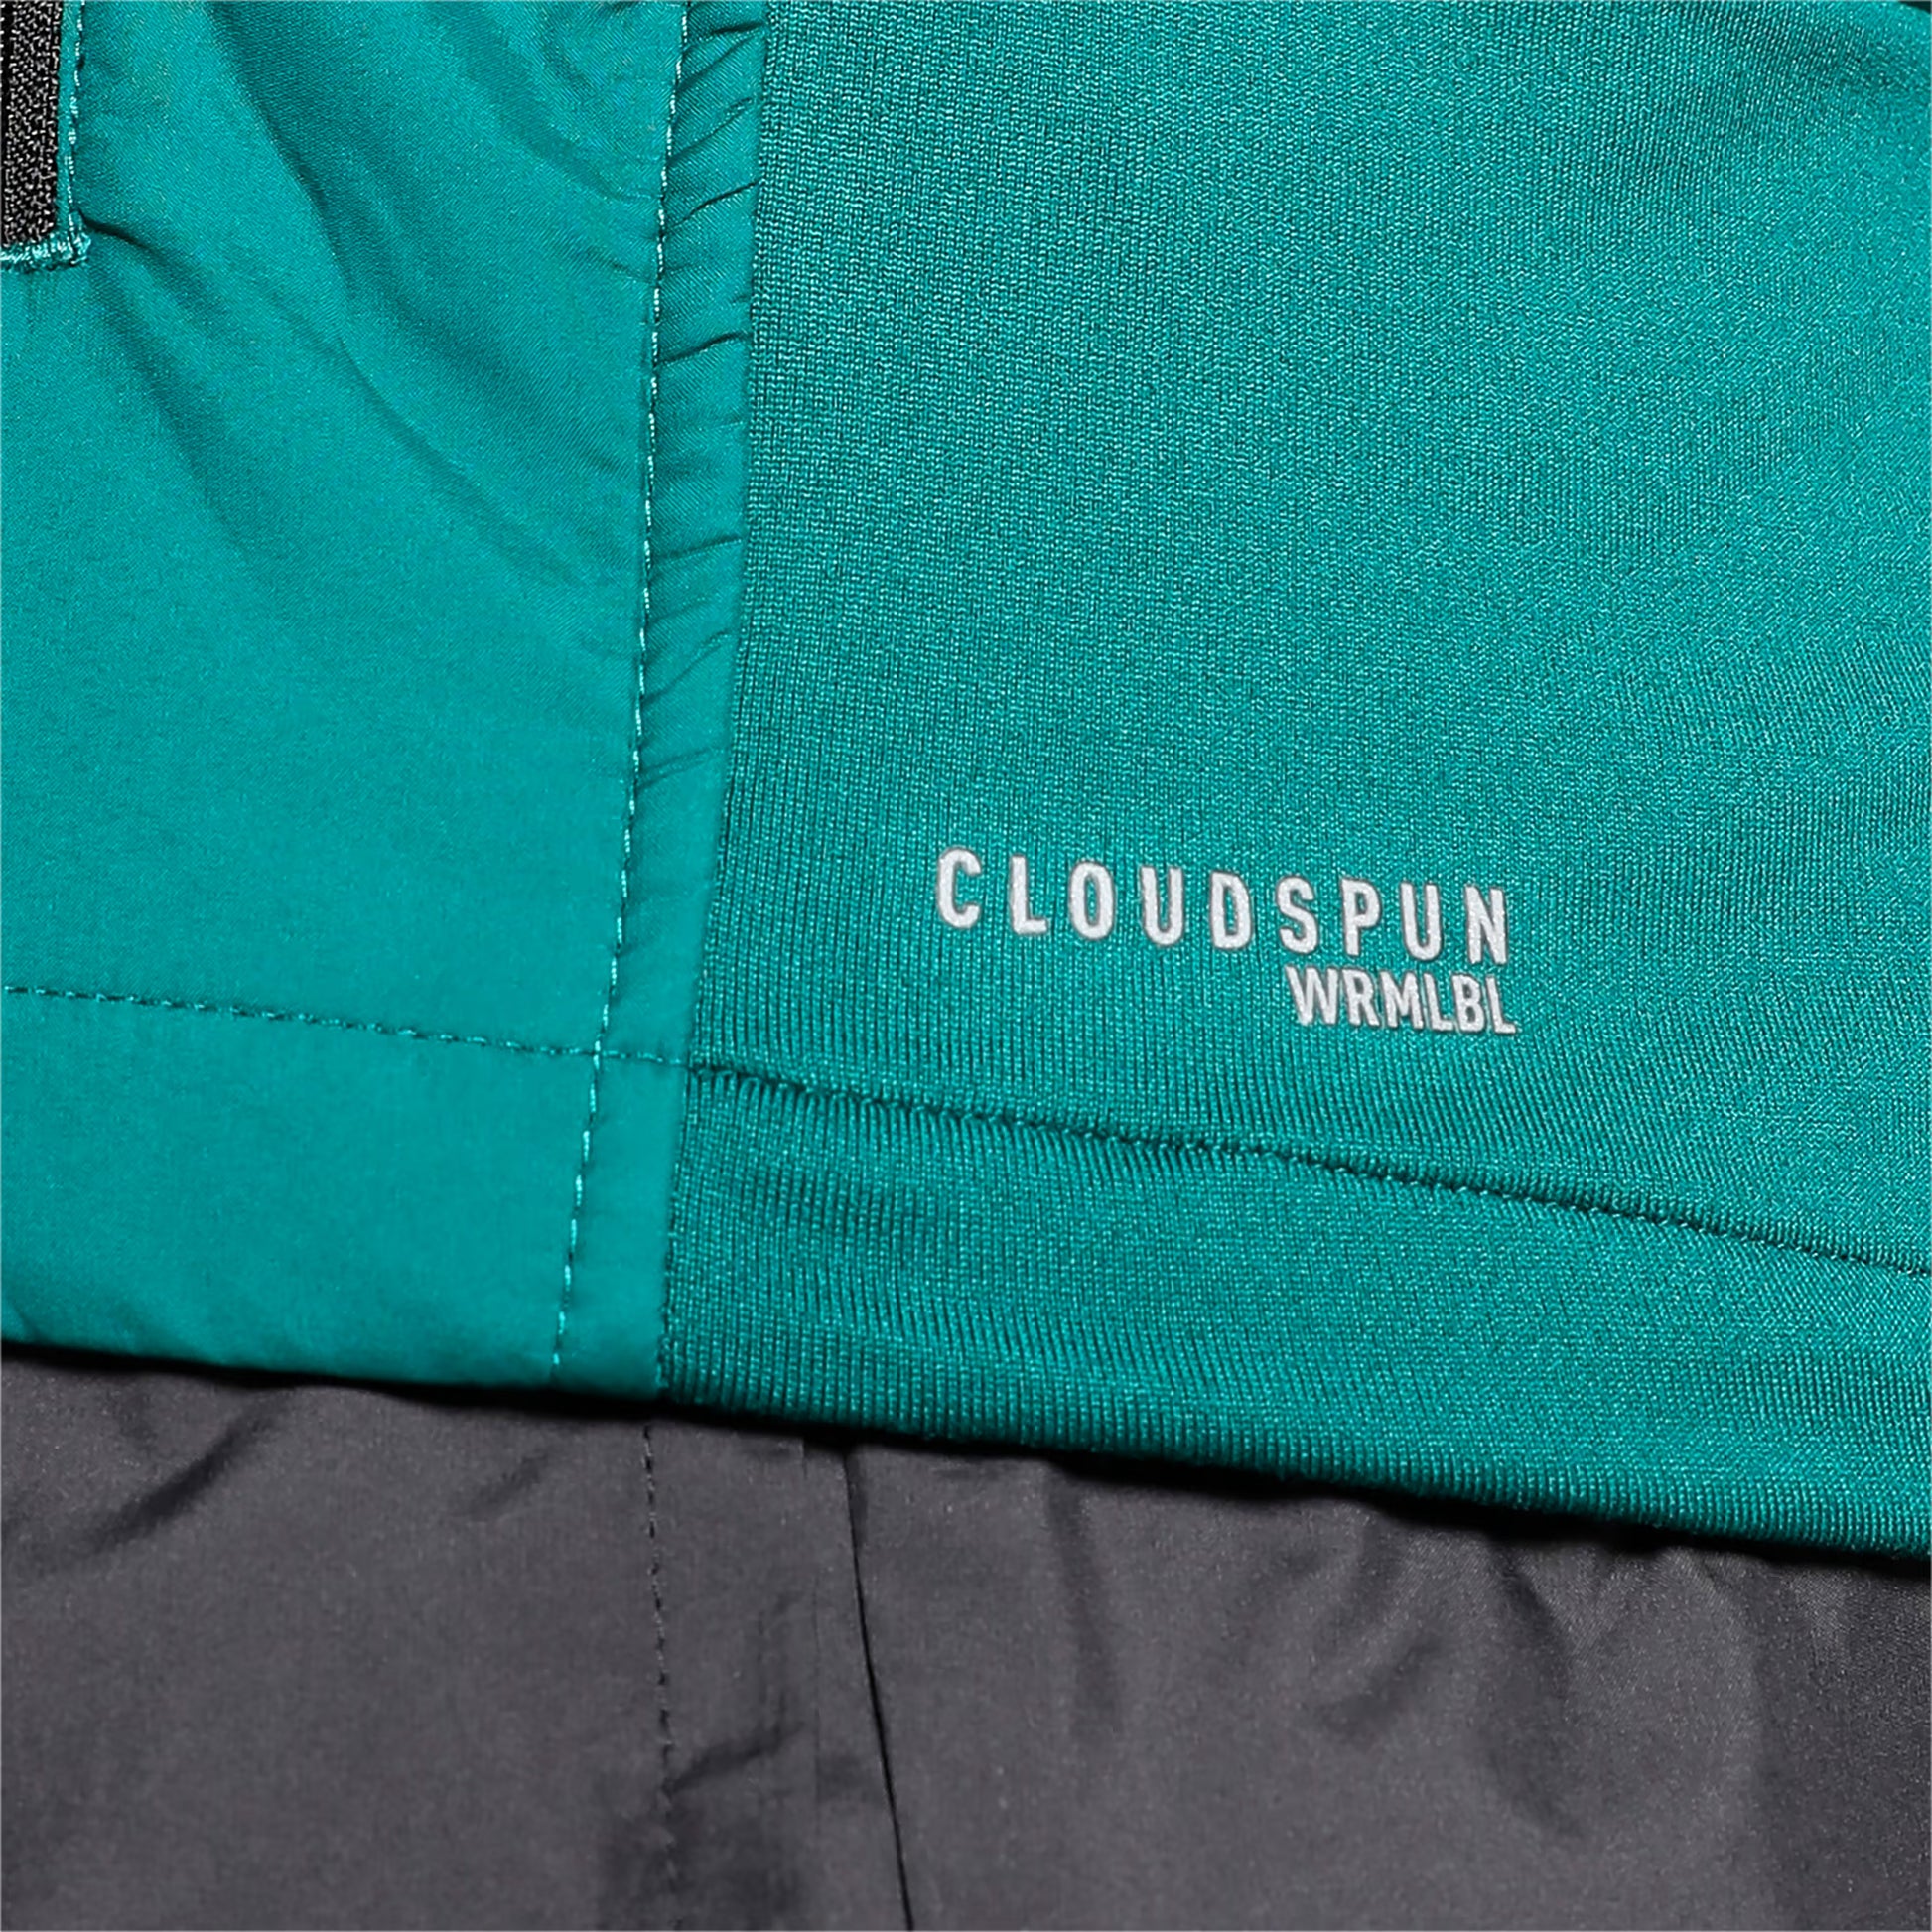 Puma Cloudspun Wrmlbl Jacket Details